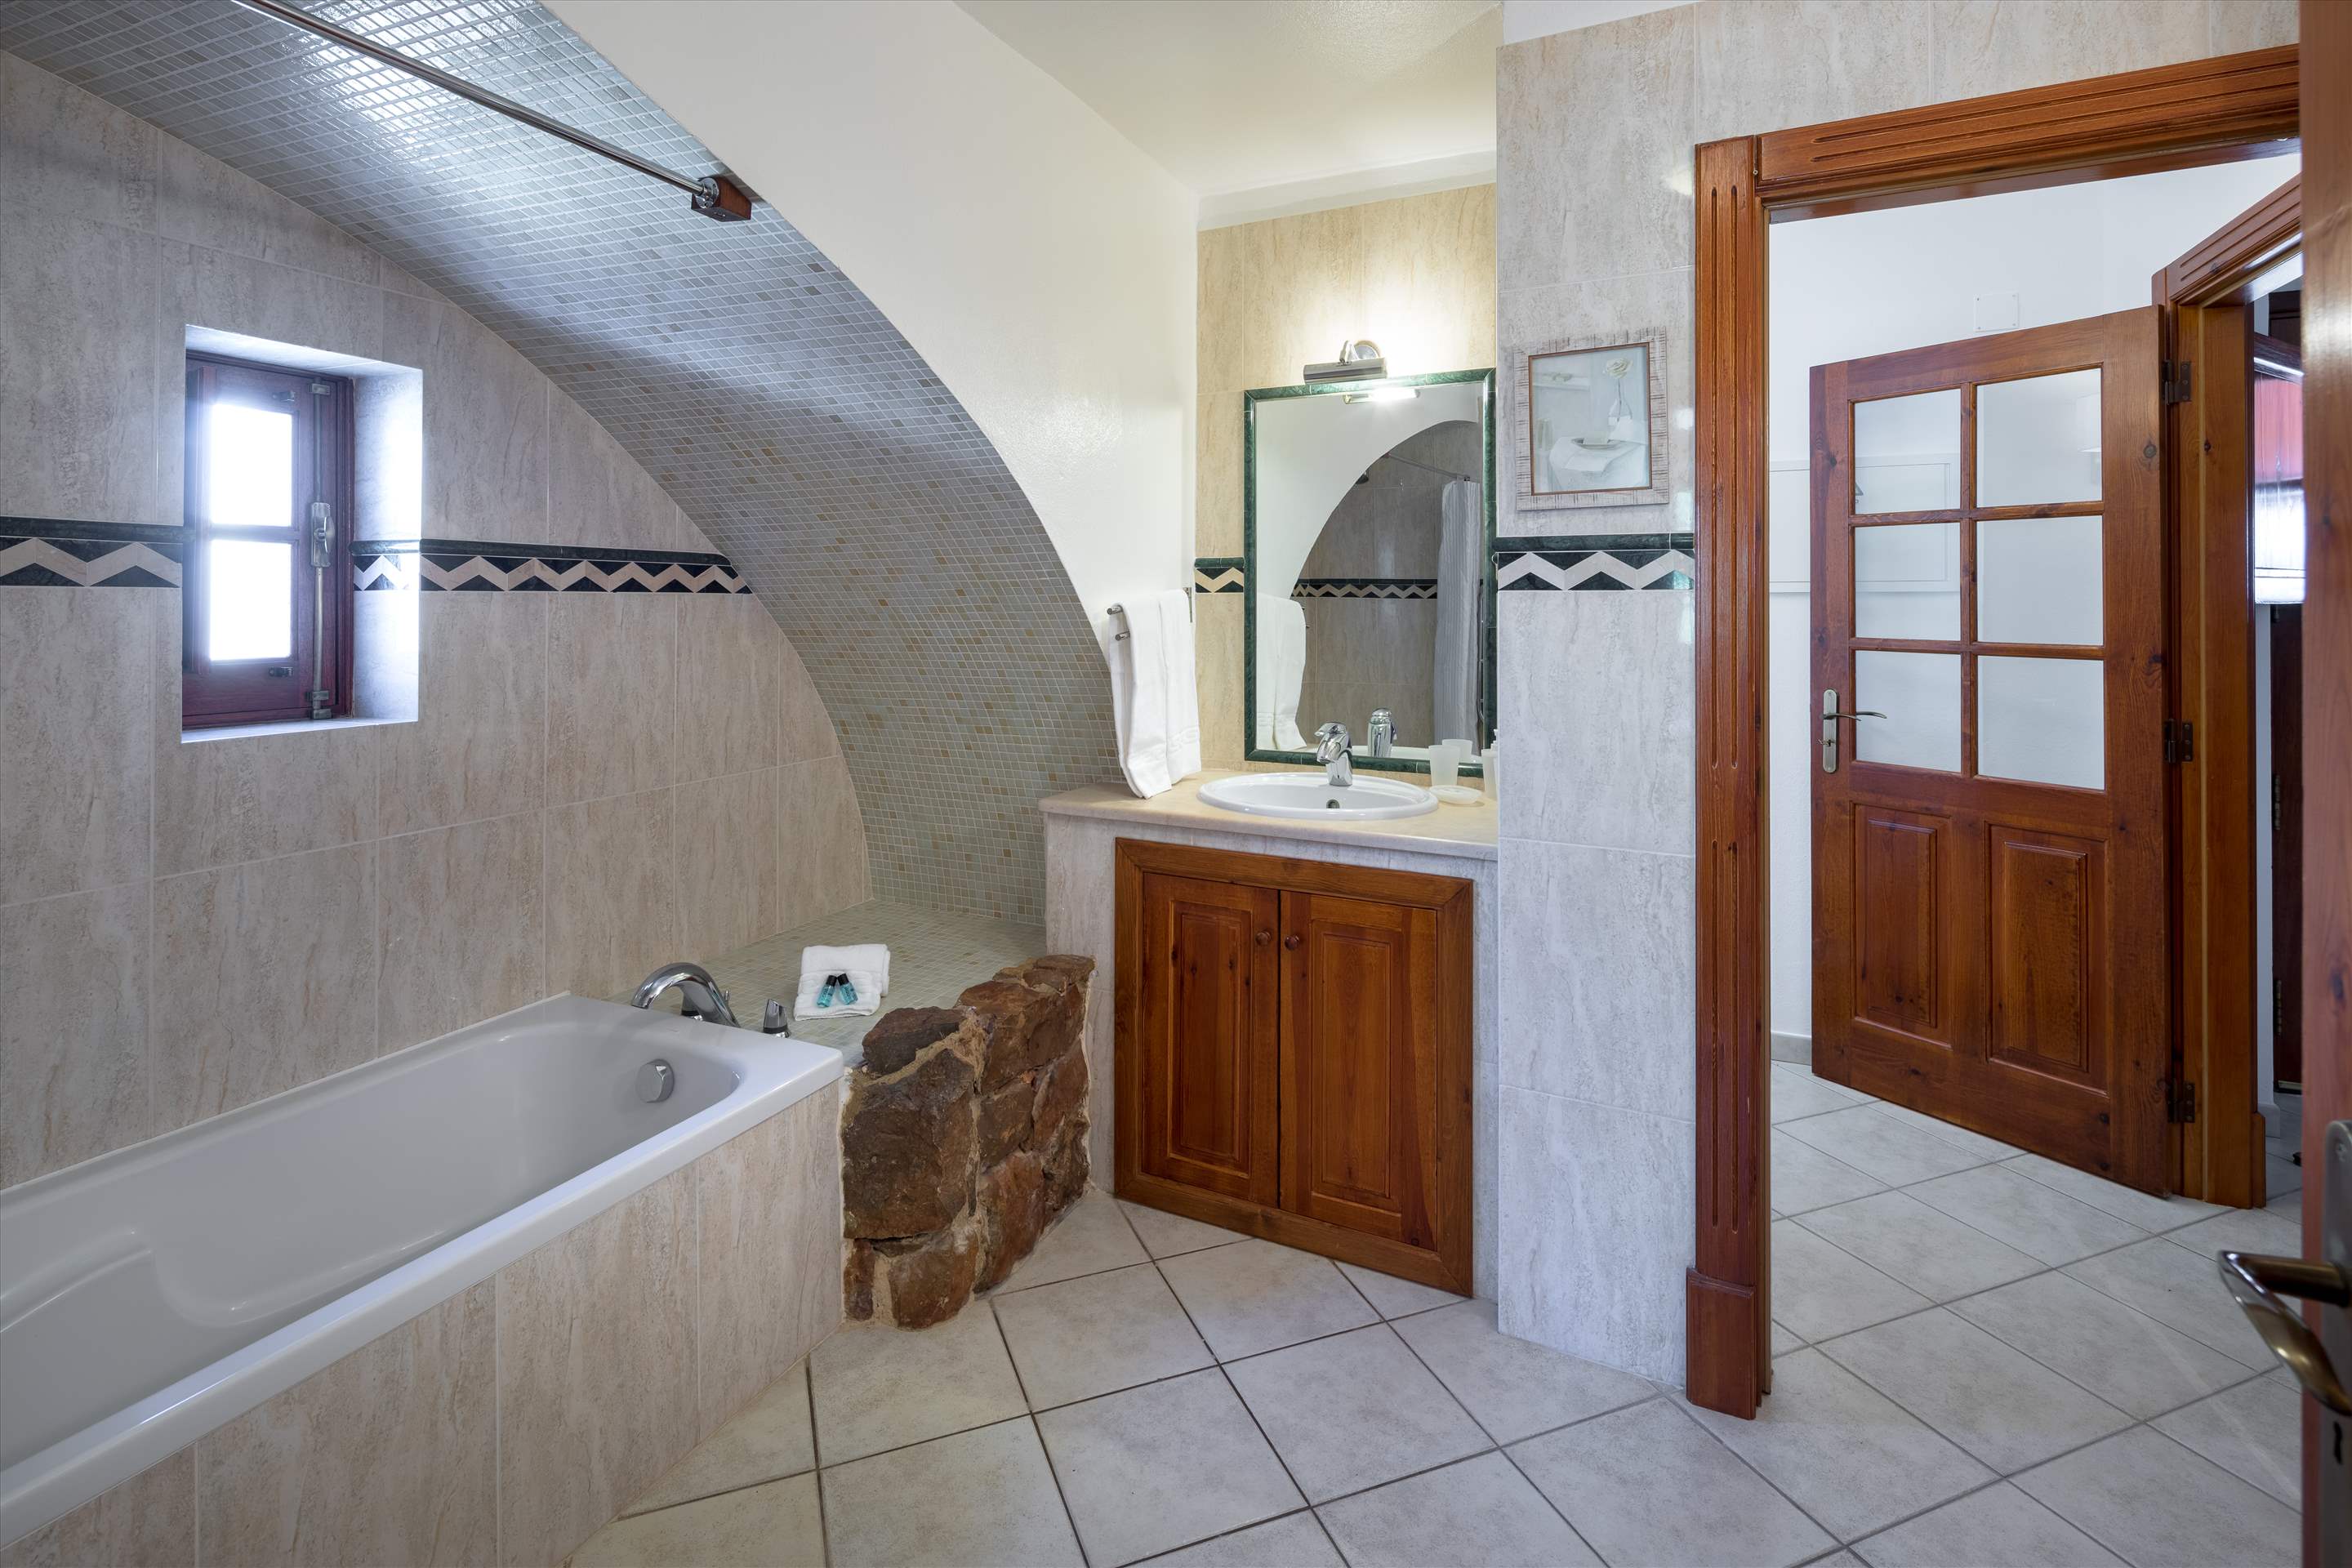 Casa do Ingles, up to 6 persons, 3 bedroom villa in Vilamoura Area, Algarve Photo #13